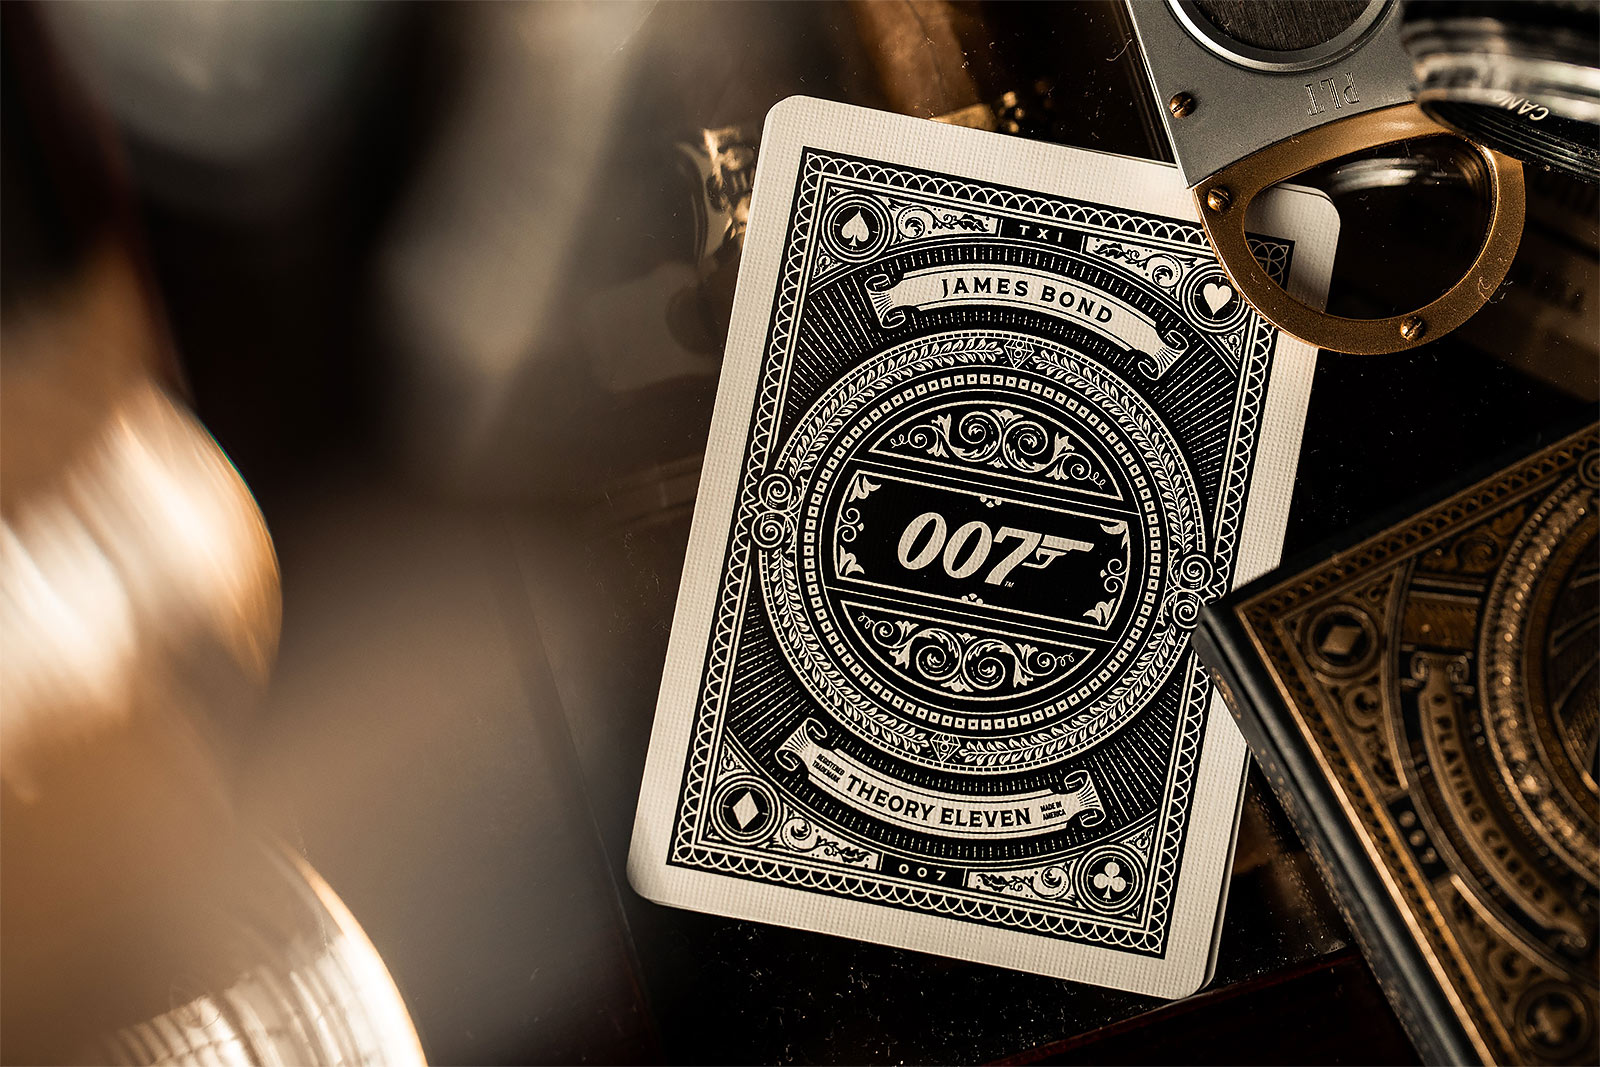 James Bond 007 Card Game